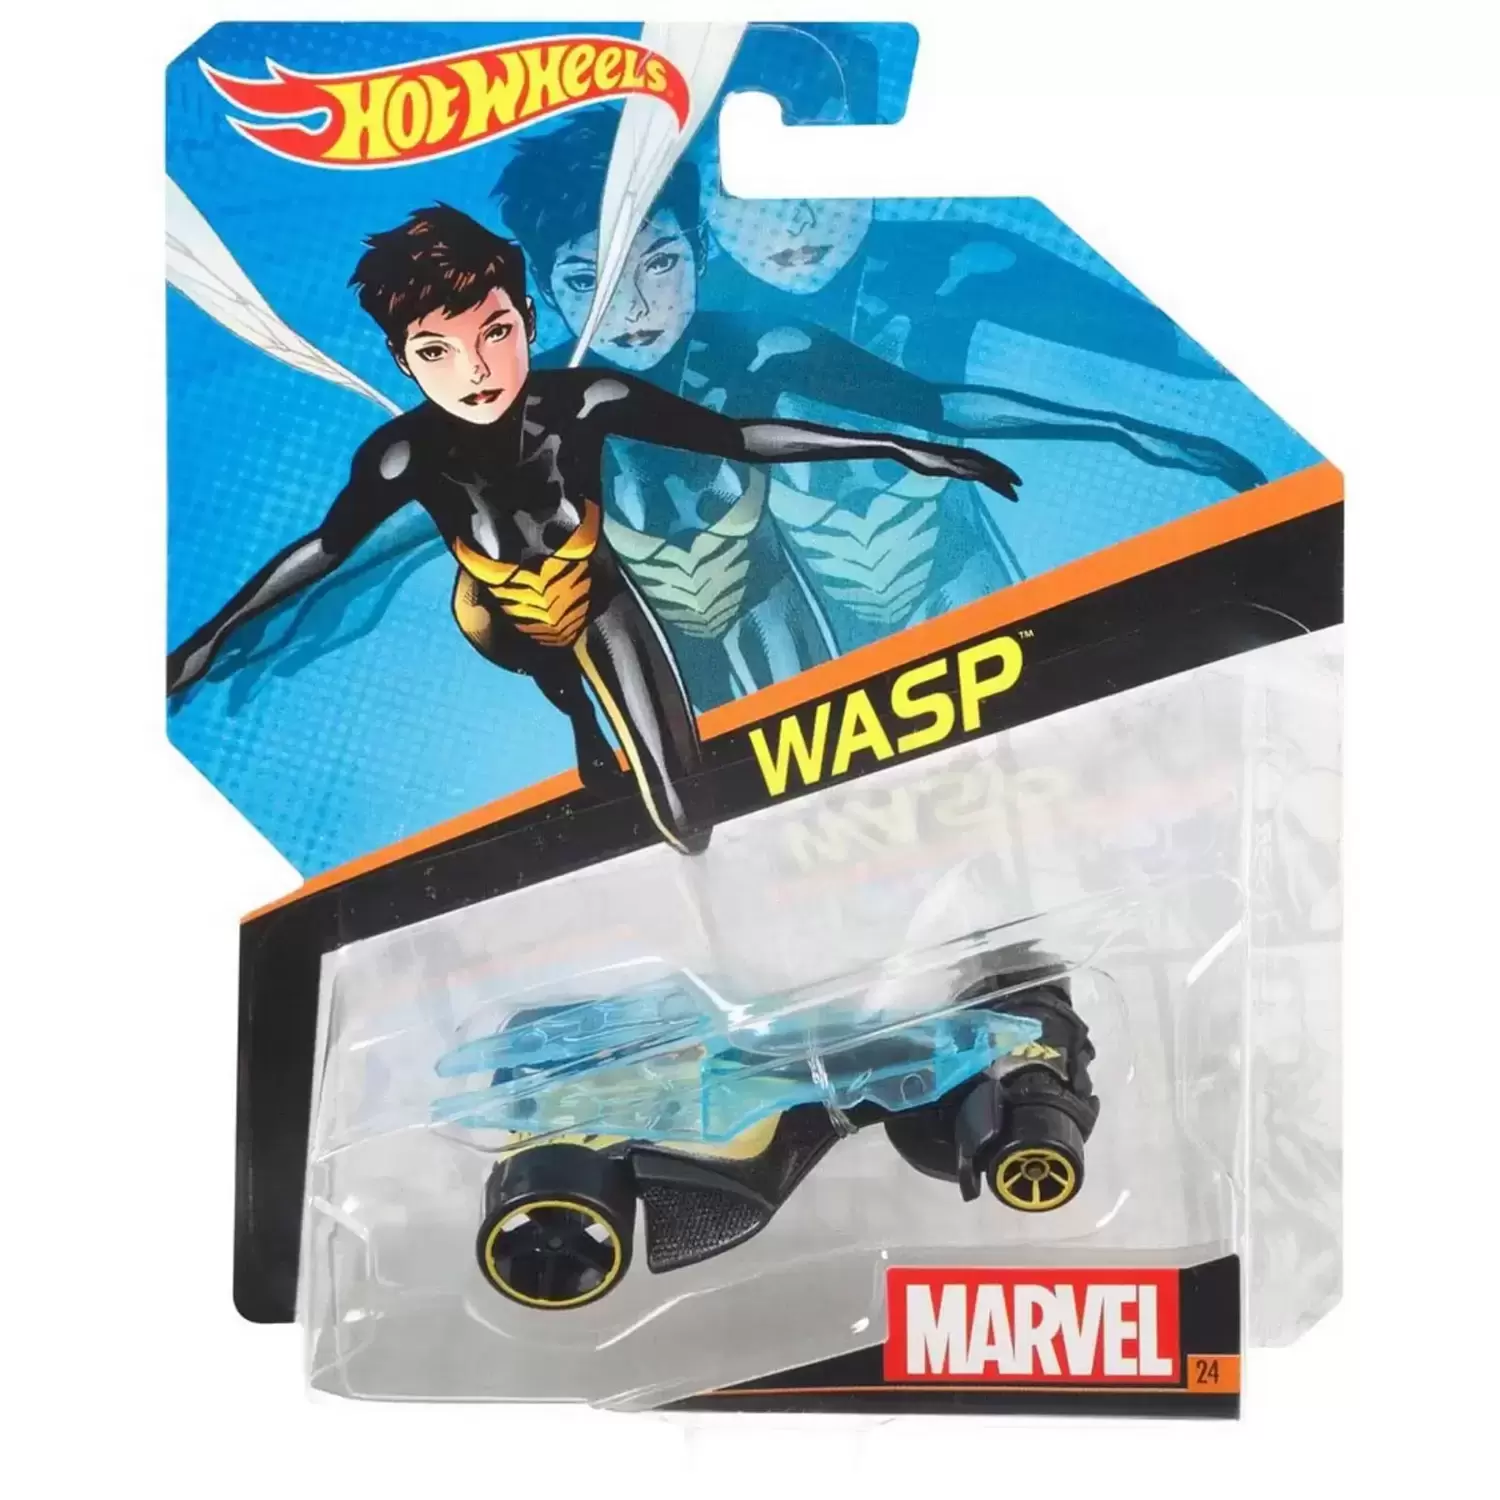 Marvel Character Cars - Wasp